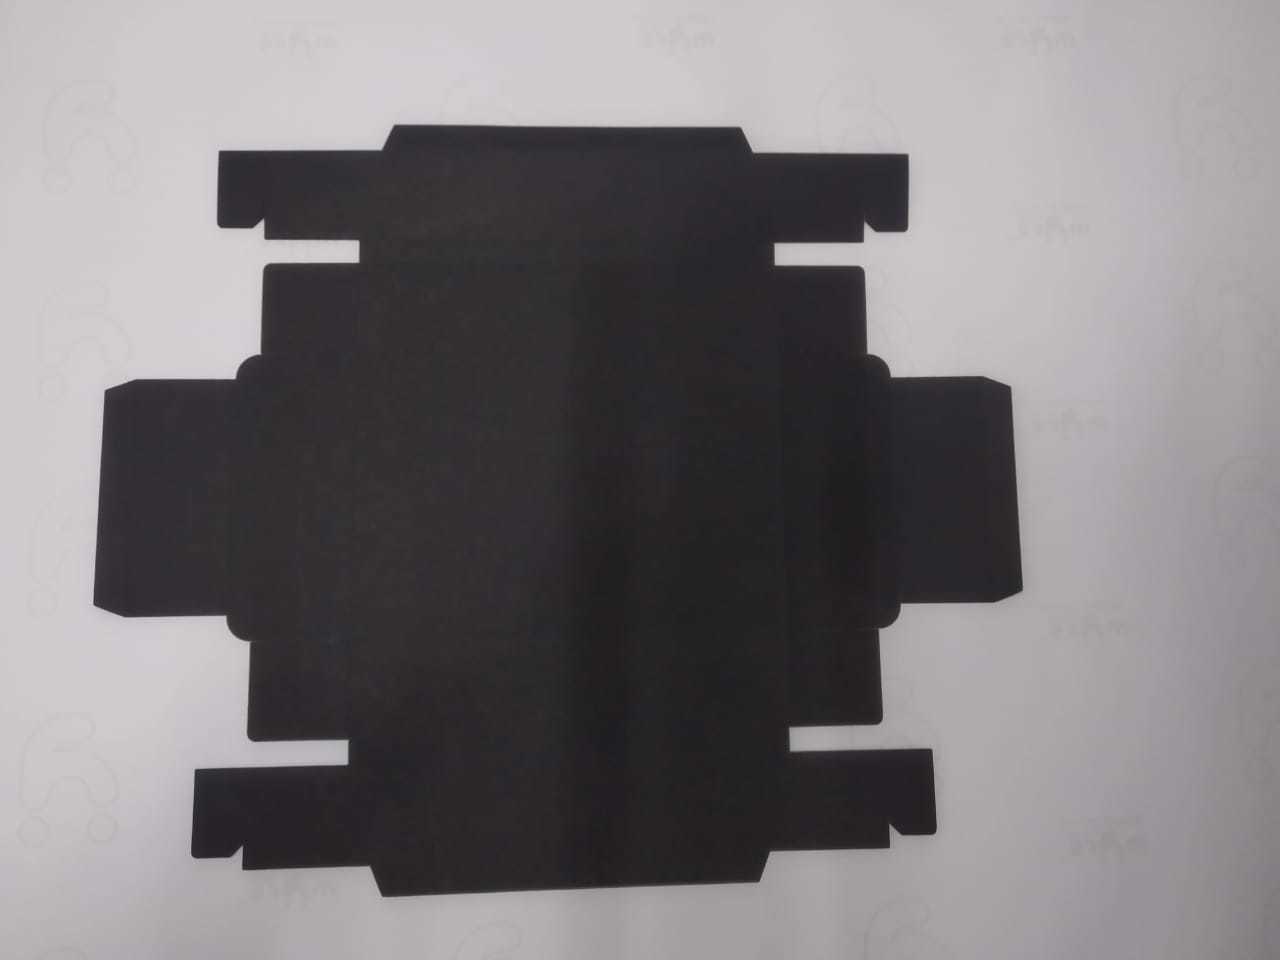 Black Paper Box